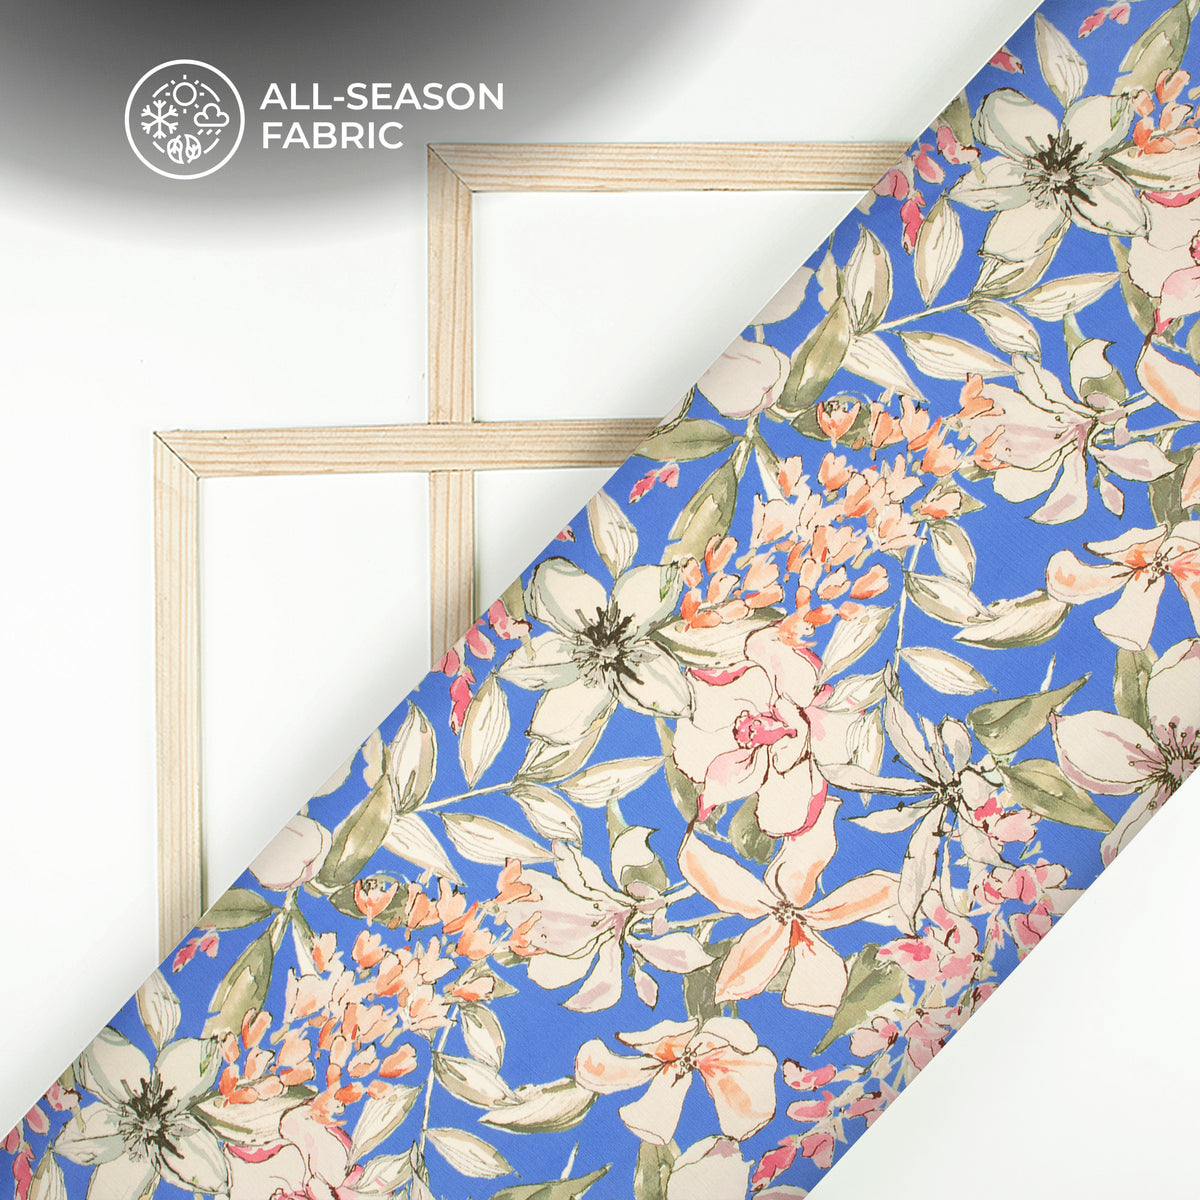 Bestselling Floral Digital Print Chiffon Satin Fabric